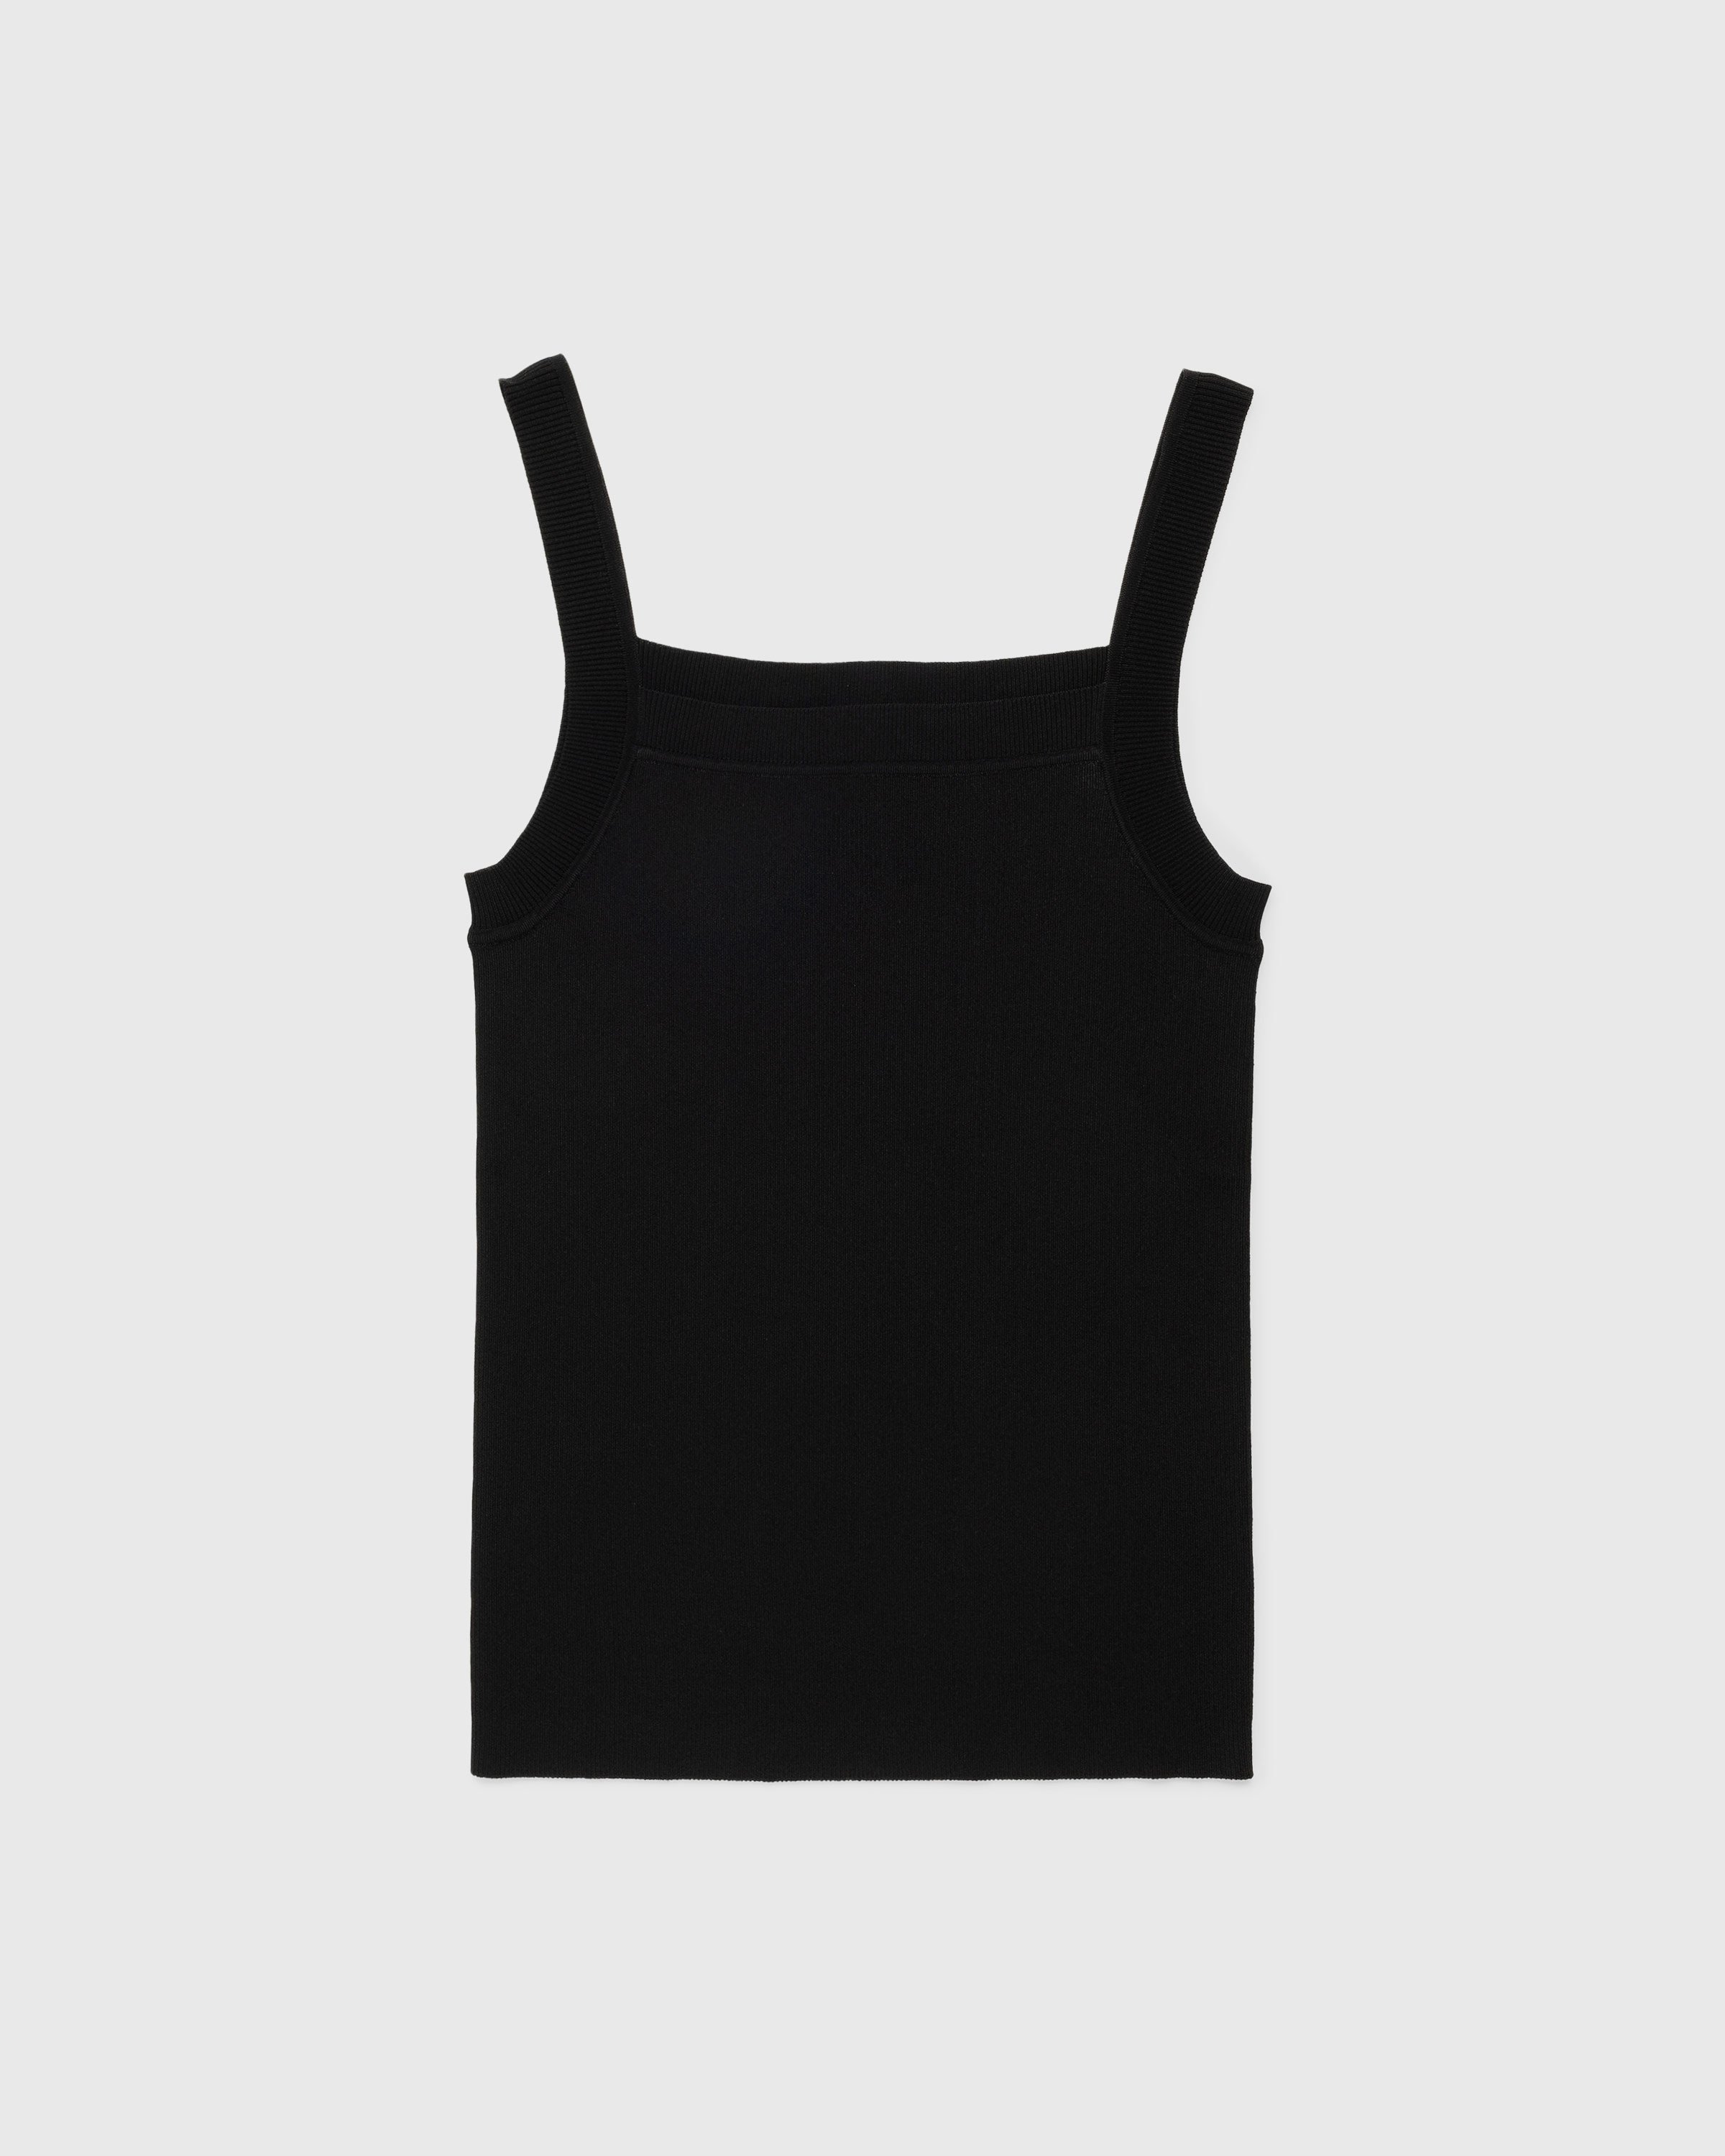 Dries van Noten - Marcos Top Black - Clothing - Black - Image 1